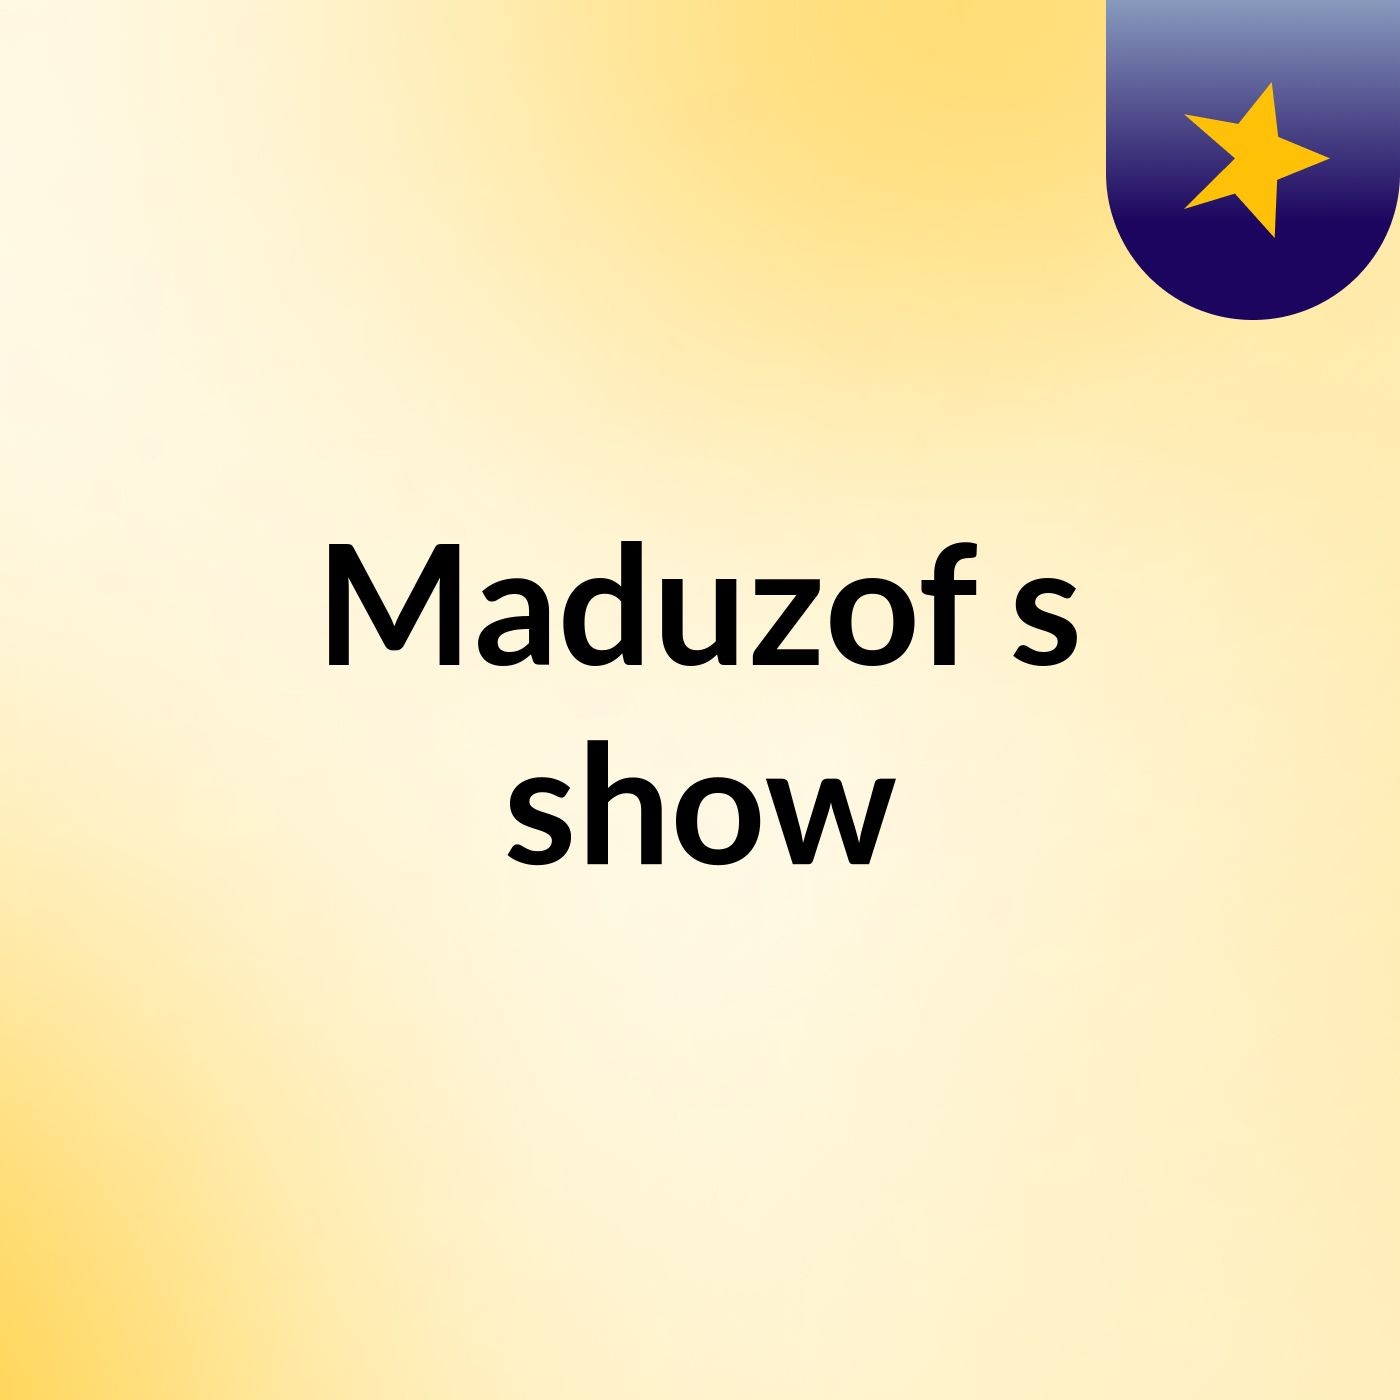 Maduzof's show